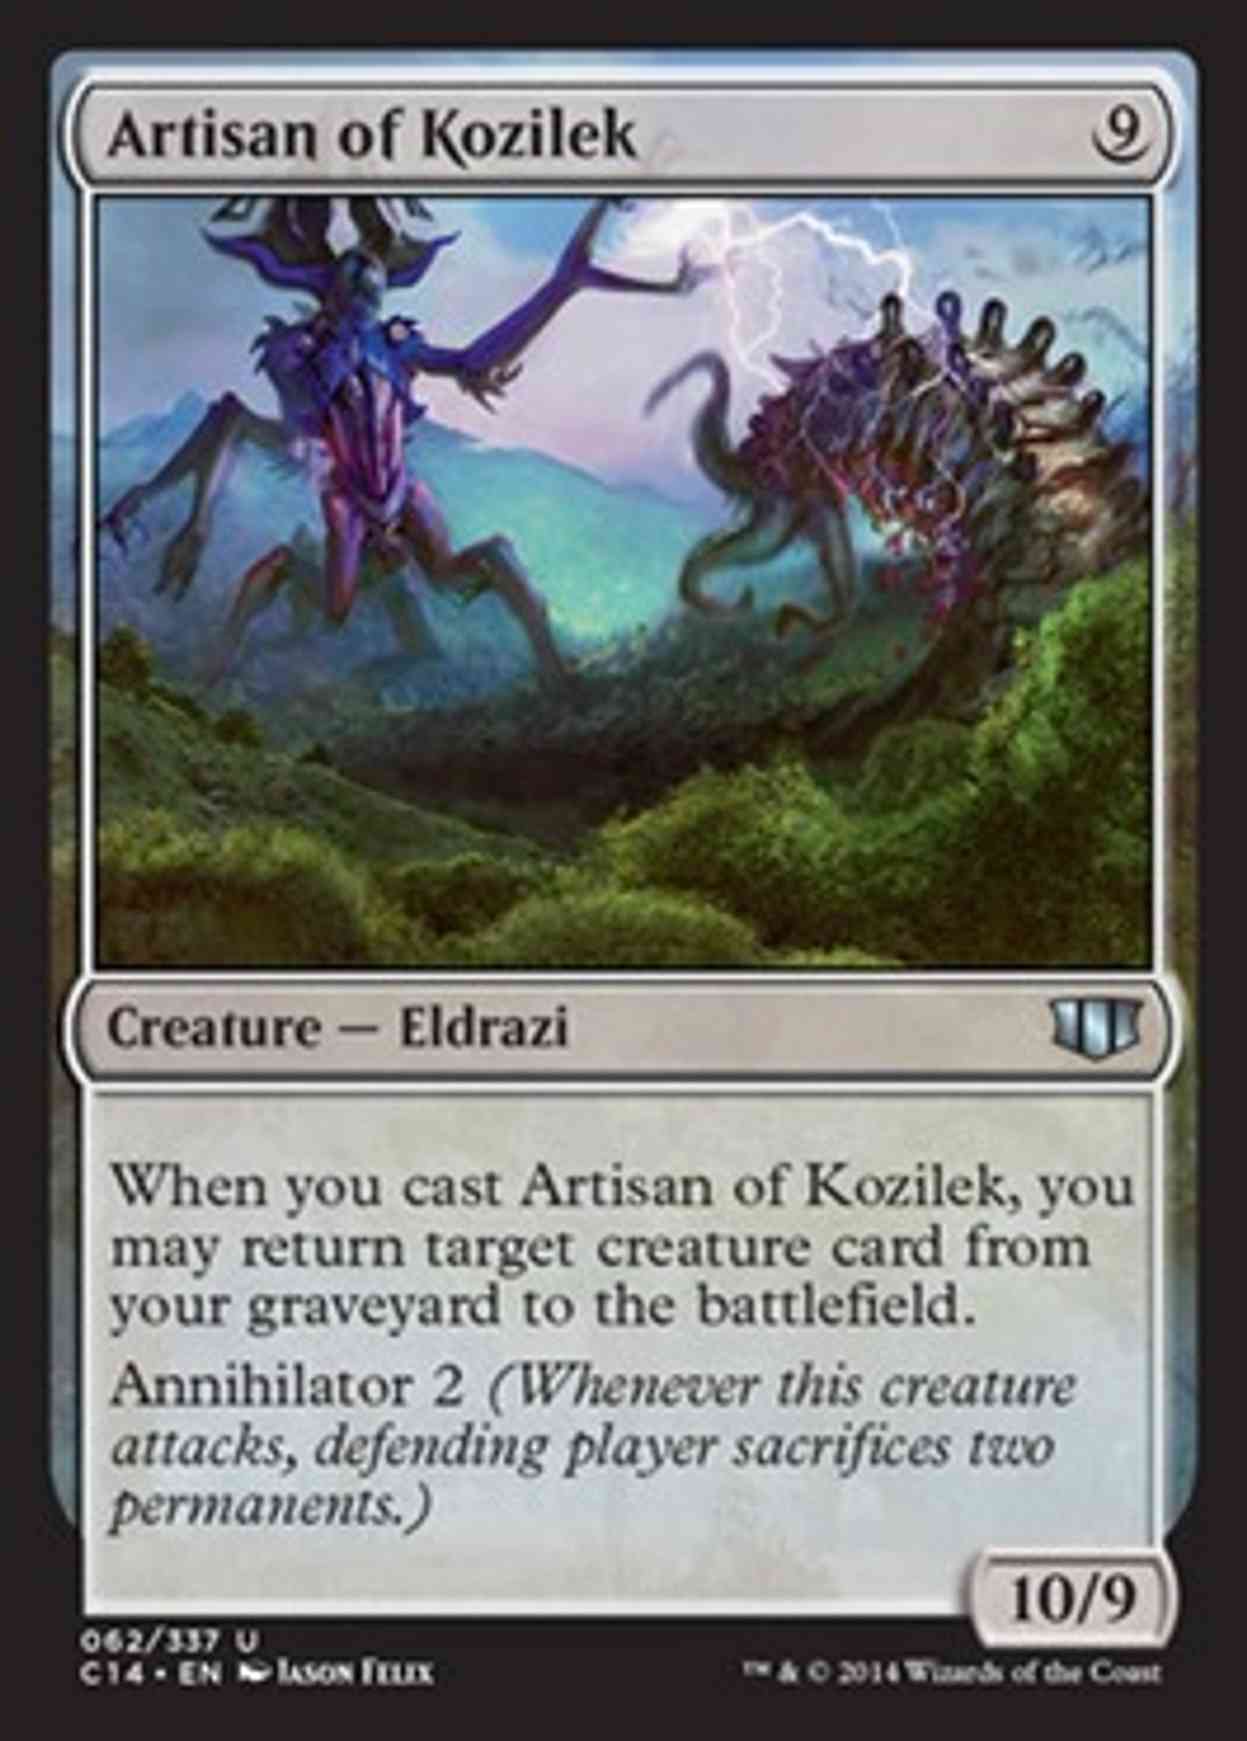 Artisan of Kozilek magic card front